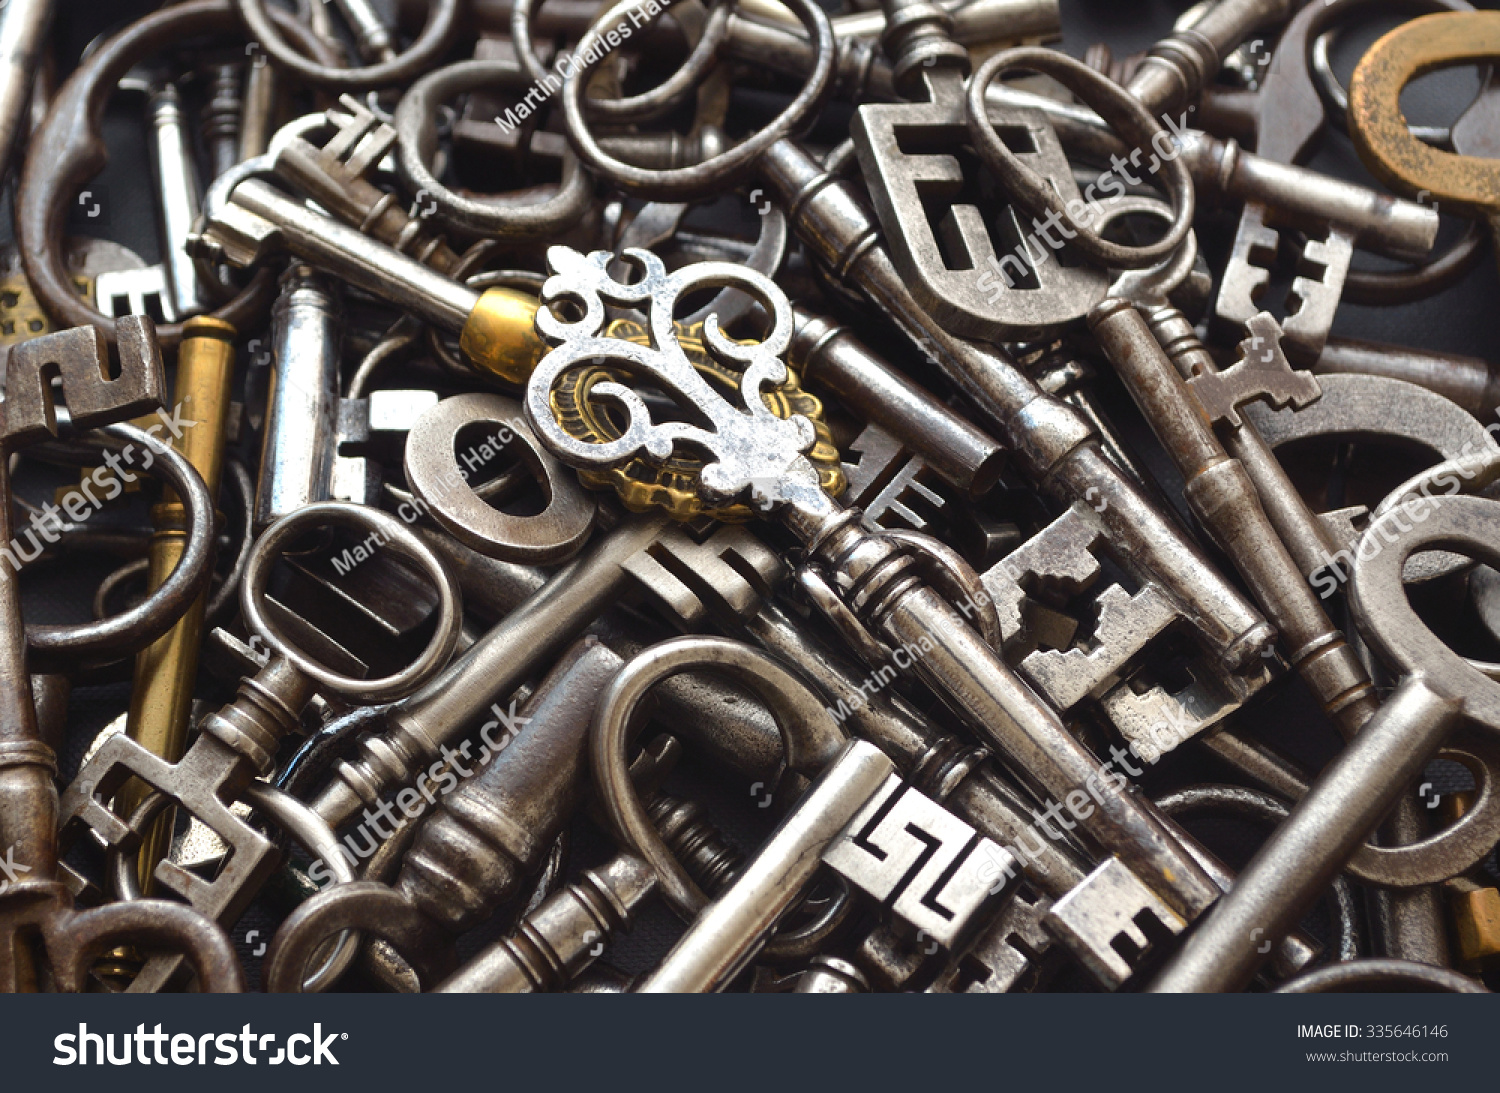 A Pile of Antique Keys background #335646146